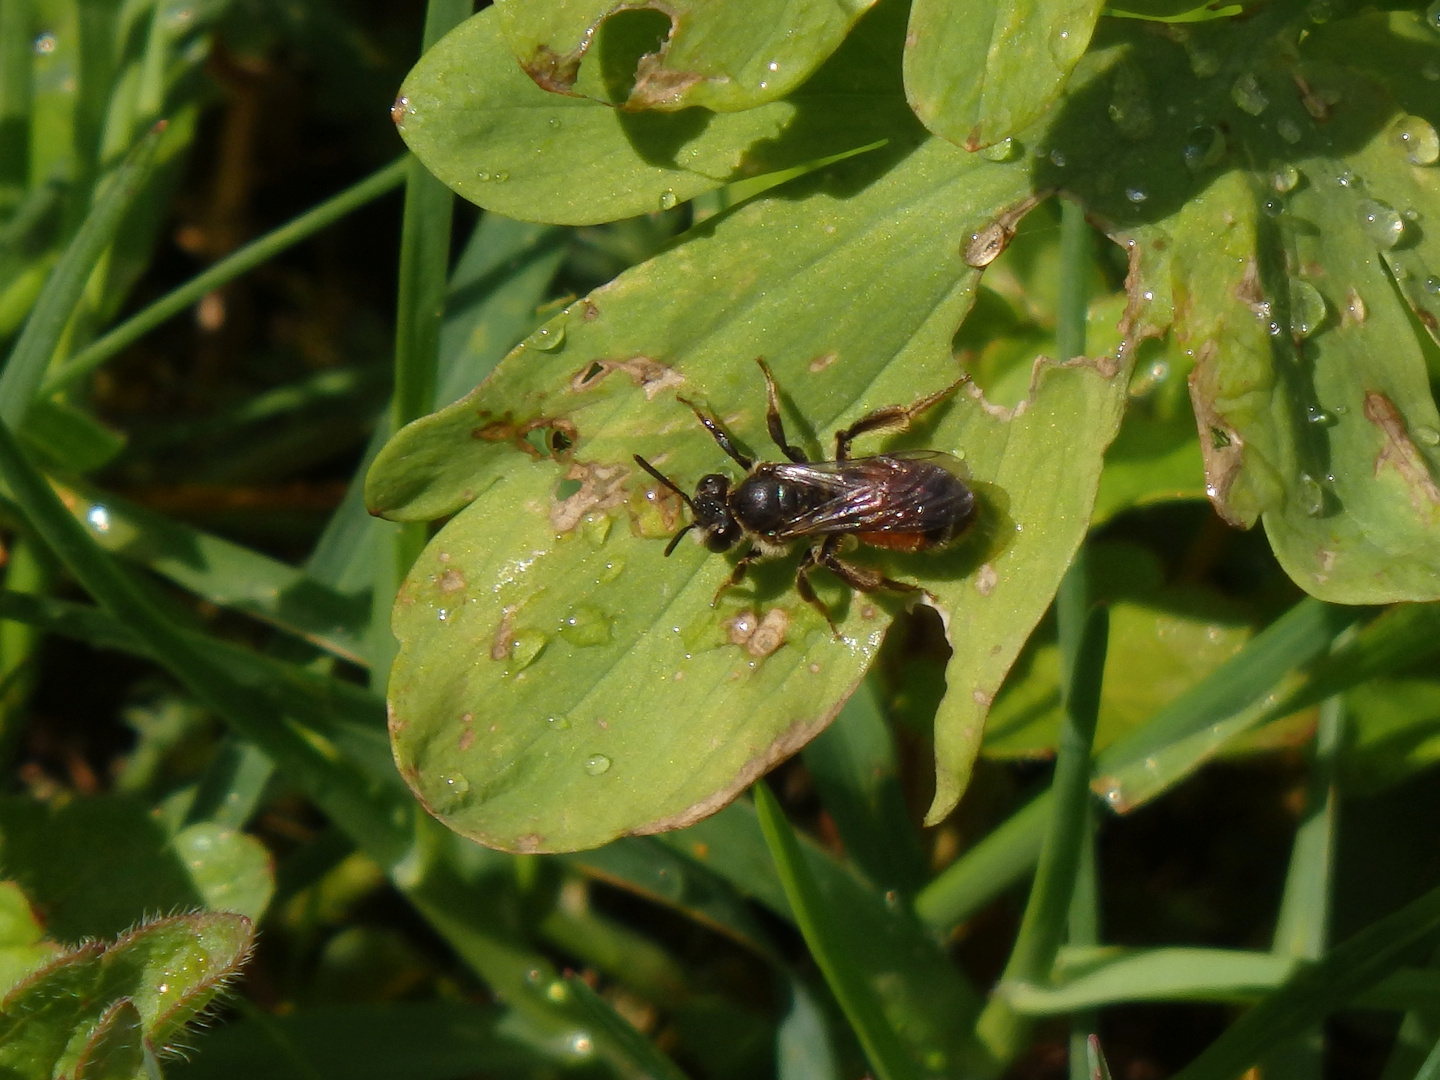 Rote Ehrenpreis-Sandbiene (Andrena labiata) im heimischen Garten